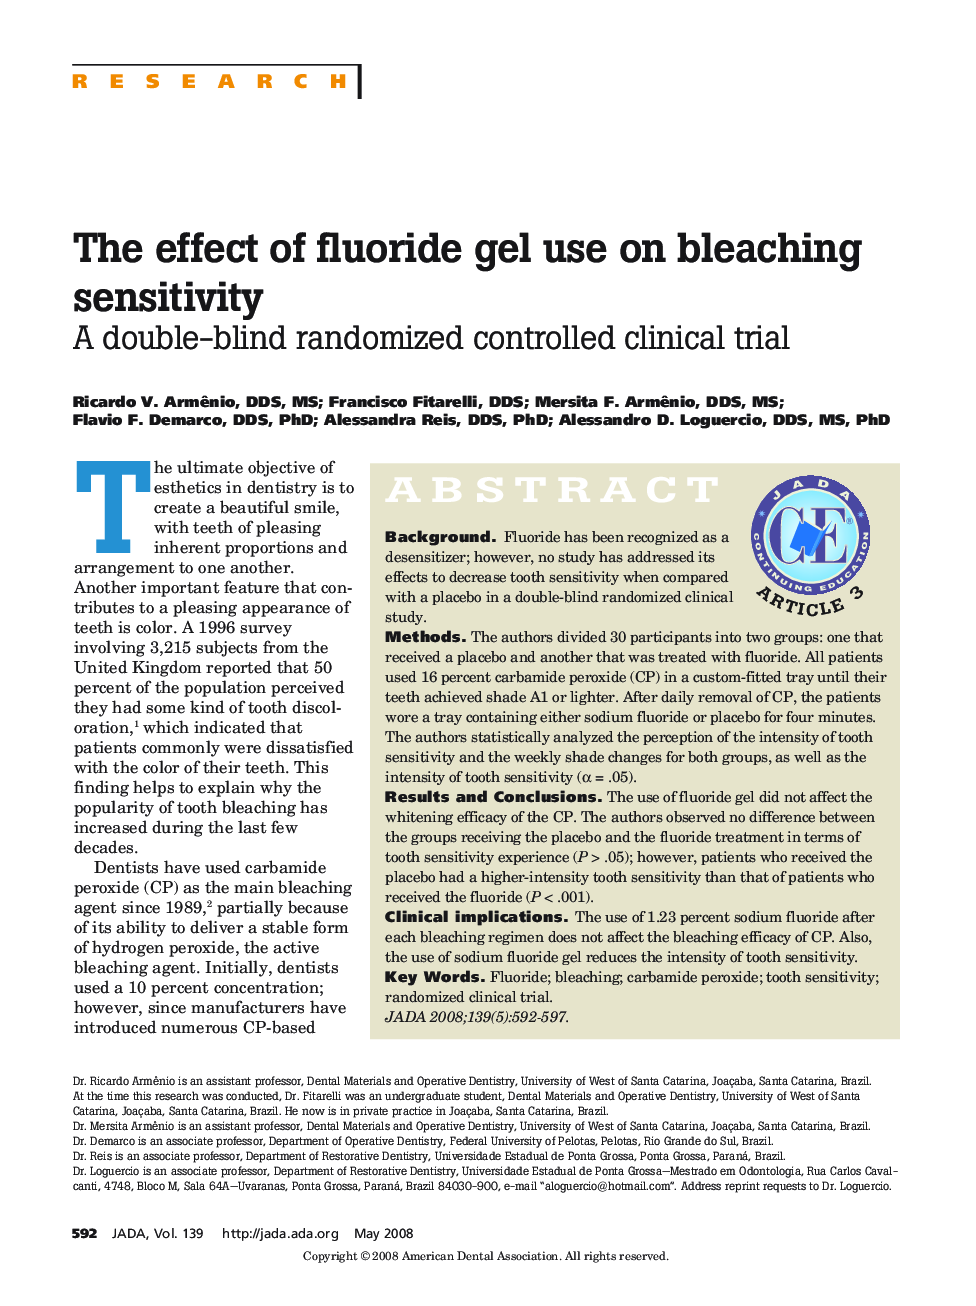 The Effect of Fluoride Gel Use on Bleaching Sensitivity